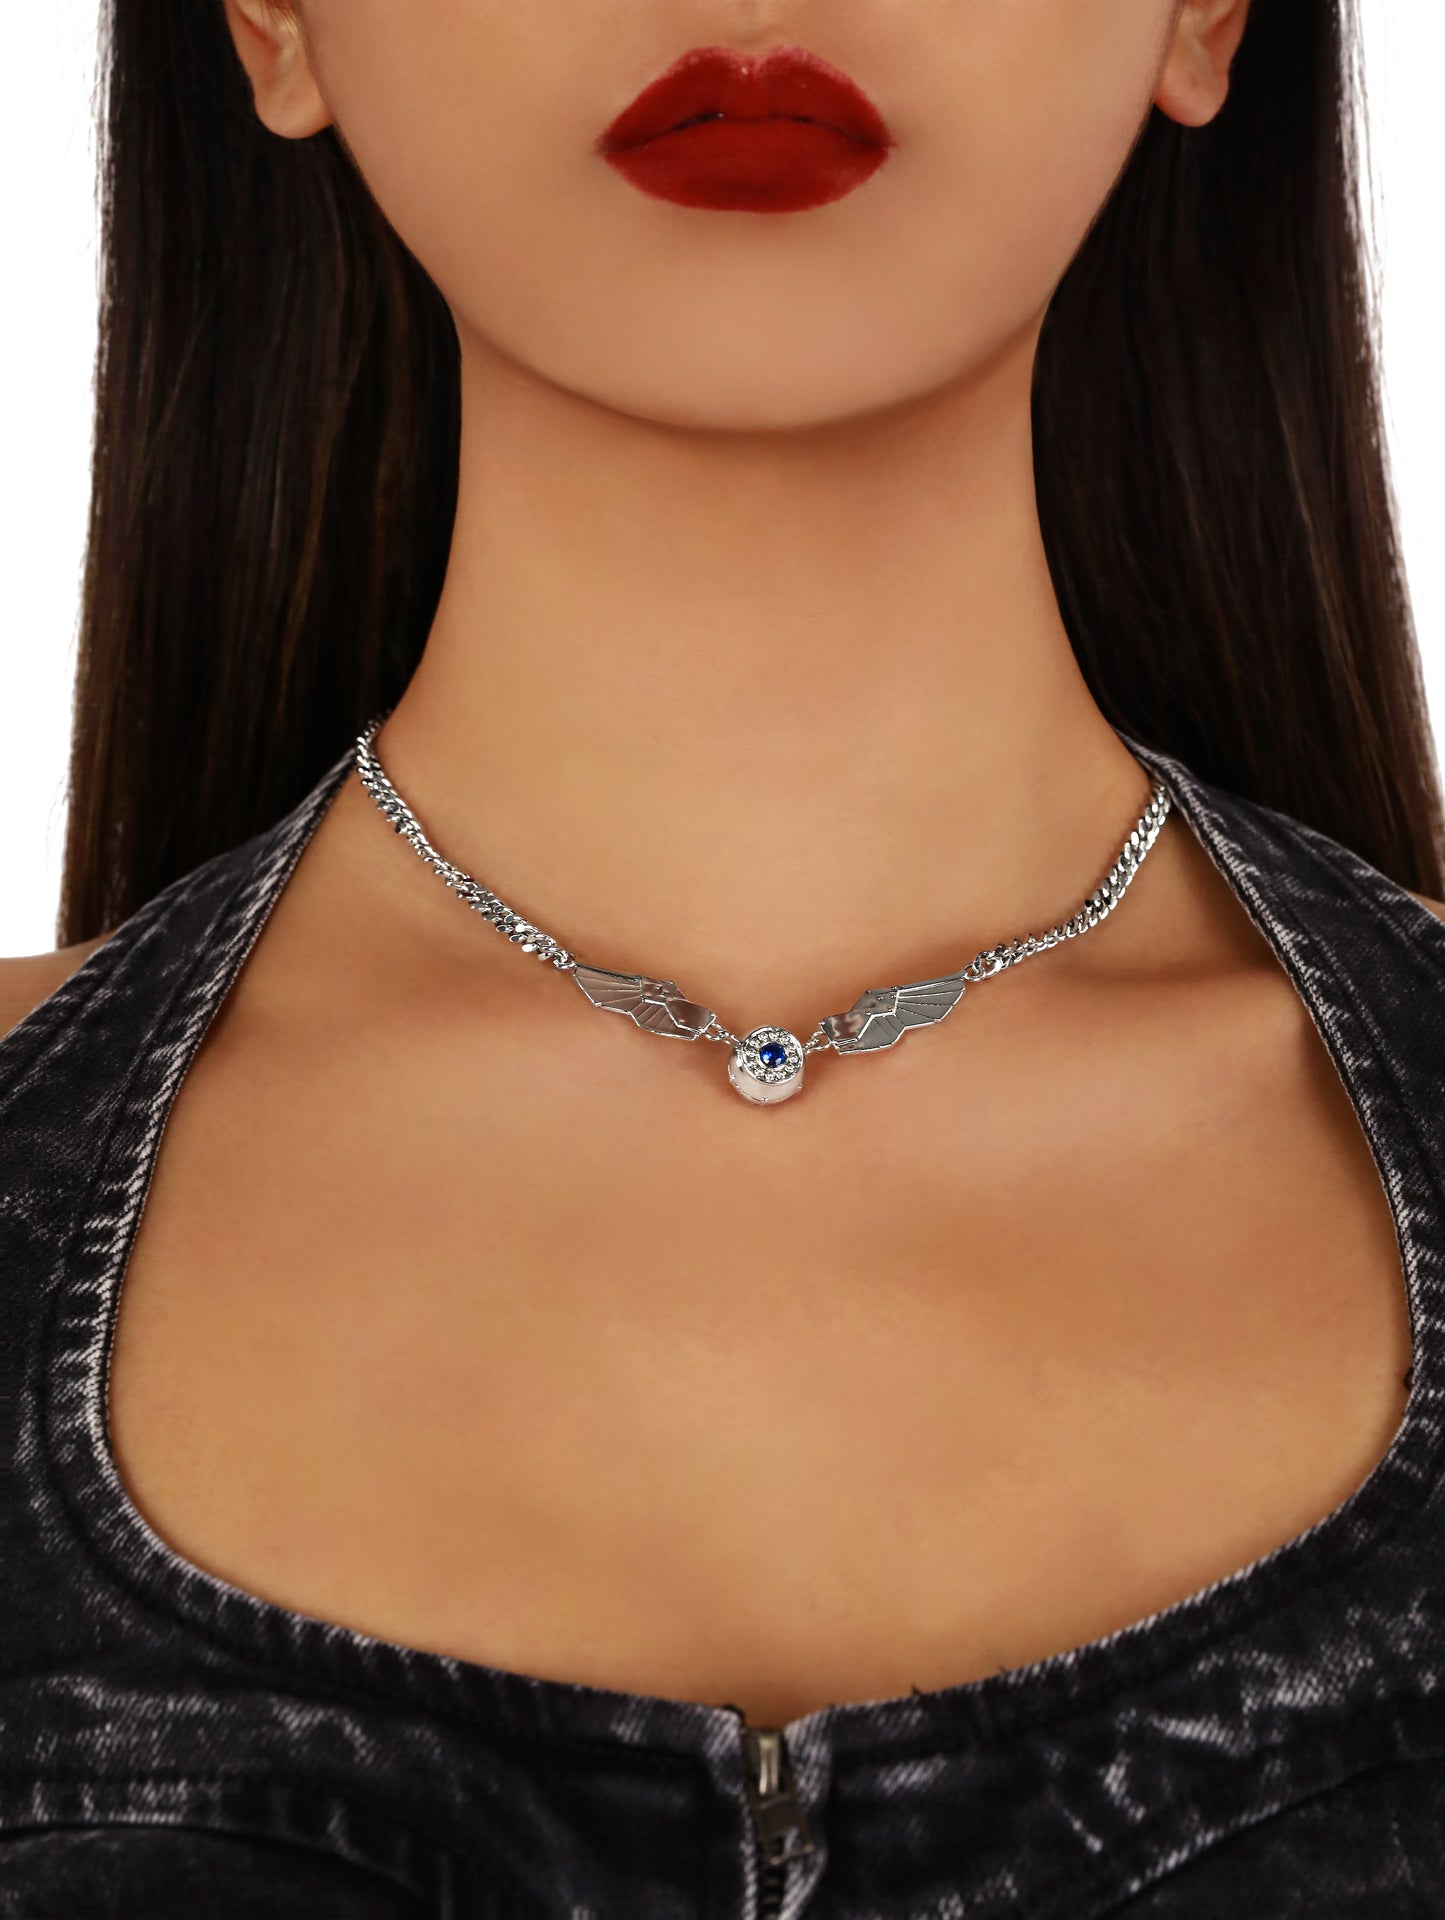 Tomorrow's Girl Series - Angel Eye Choker Necklace (Silver)